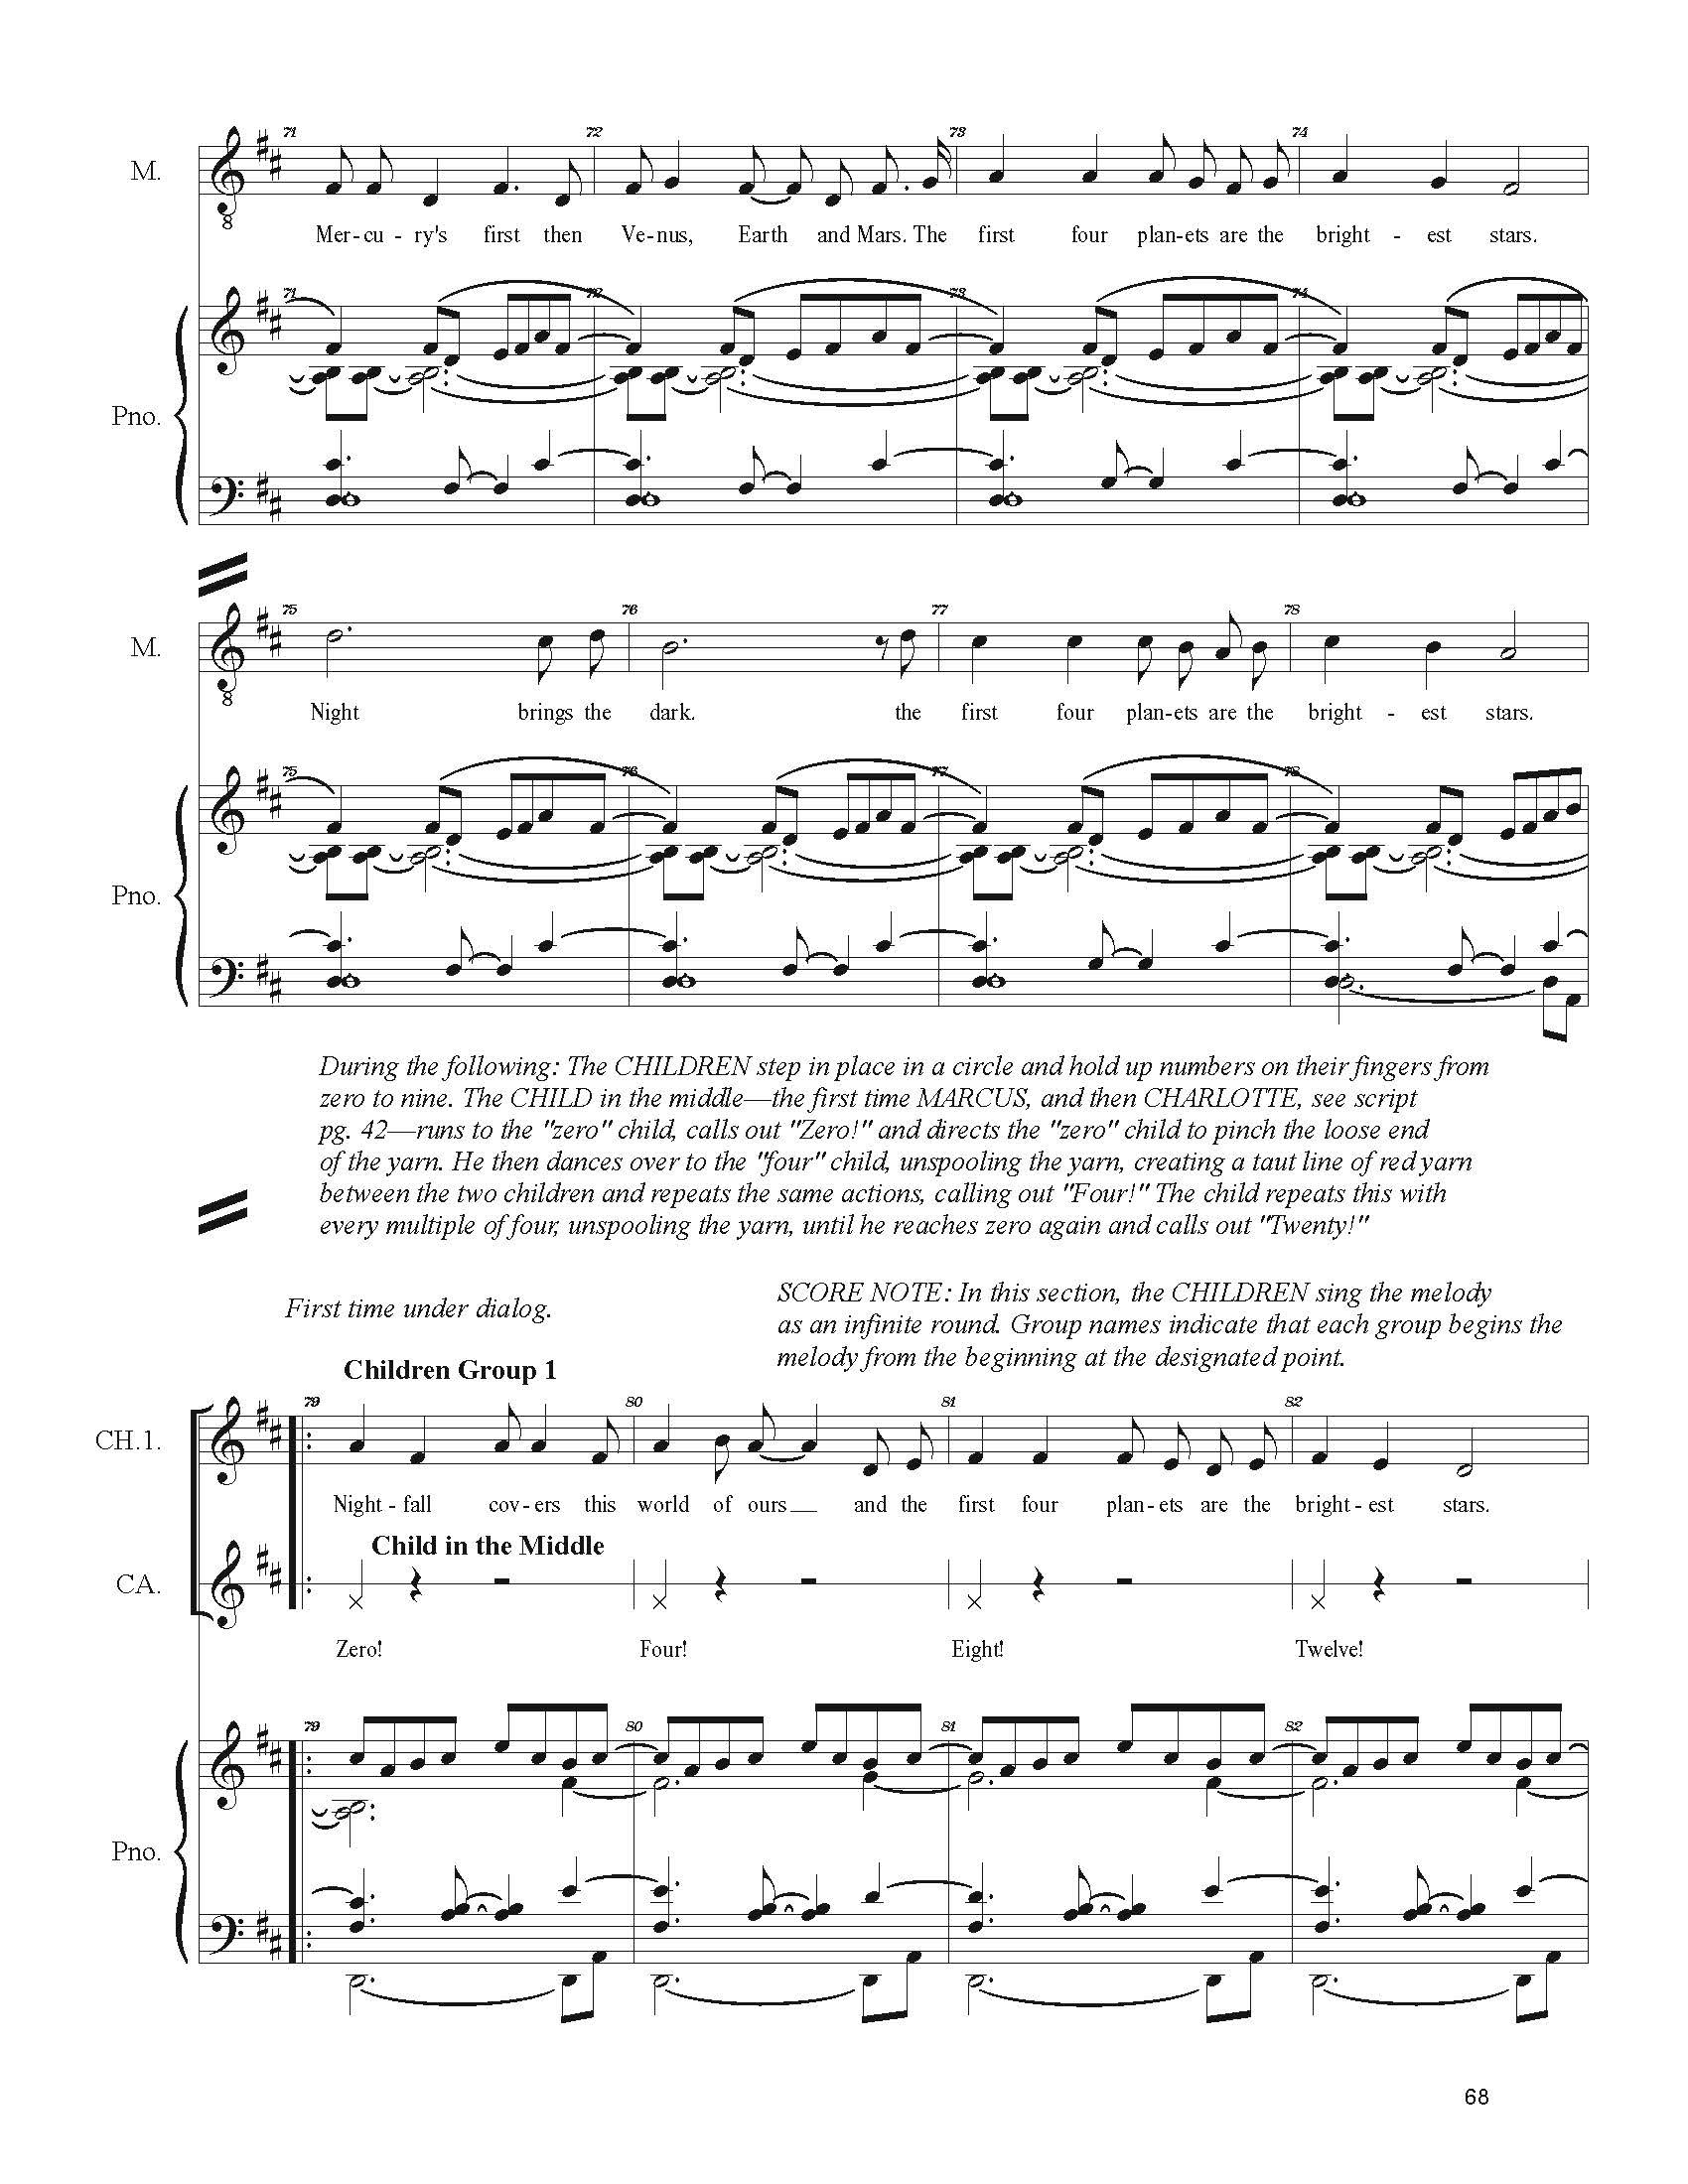 FULL PIANO VOCAL SCORE DRAFT 1 - Score_Page_068.jpg